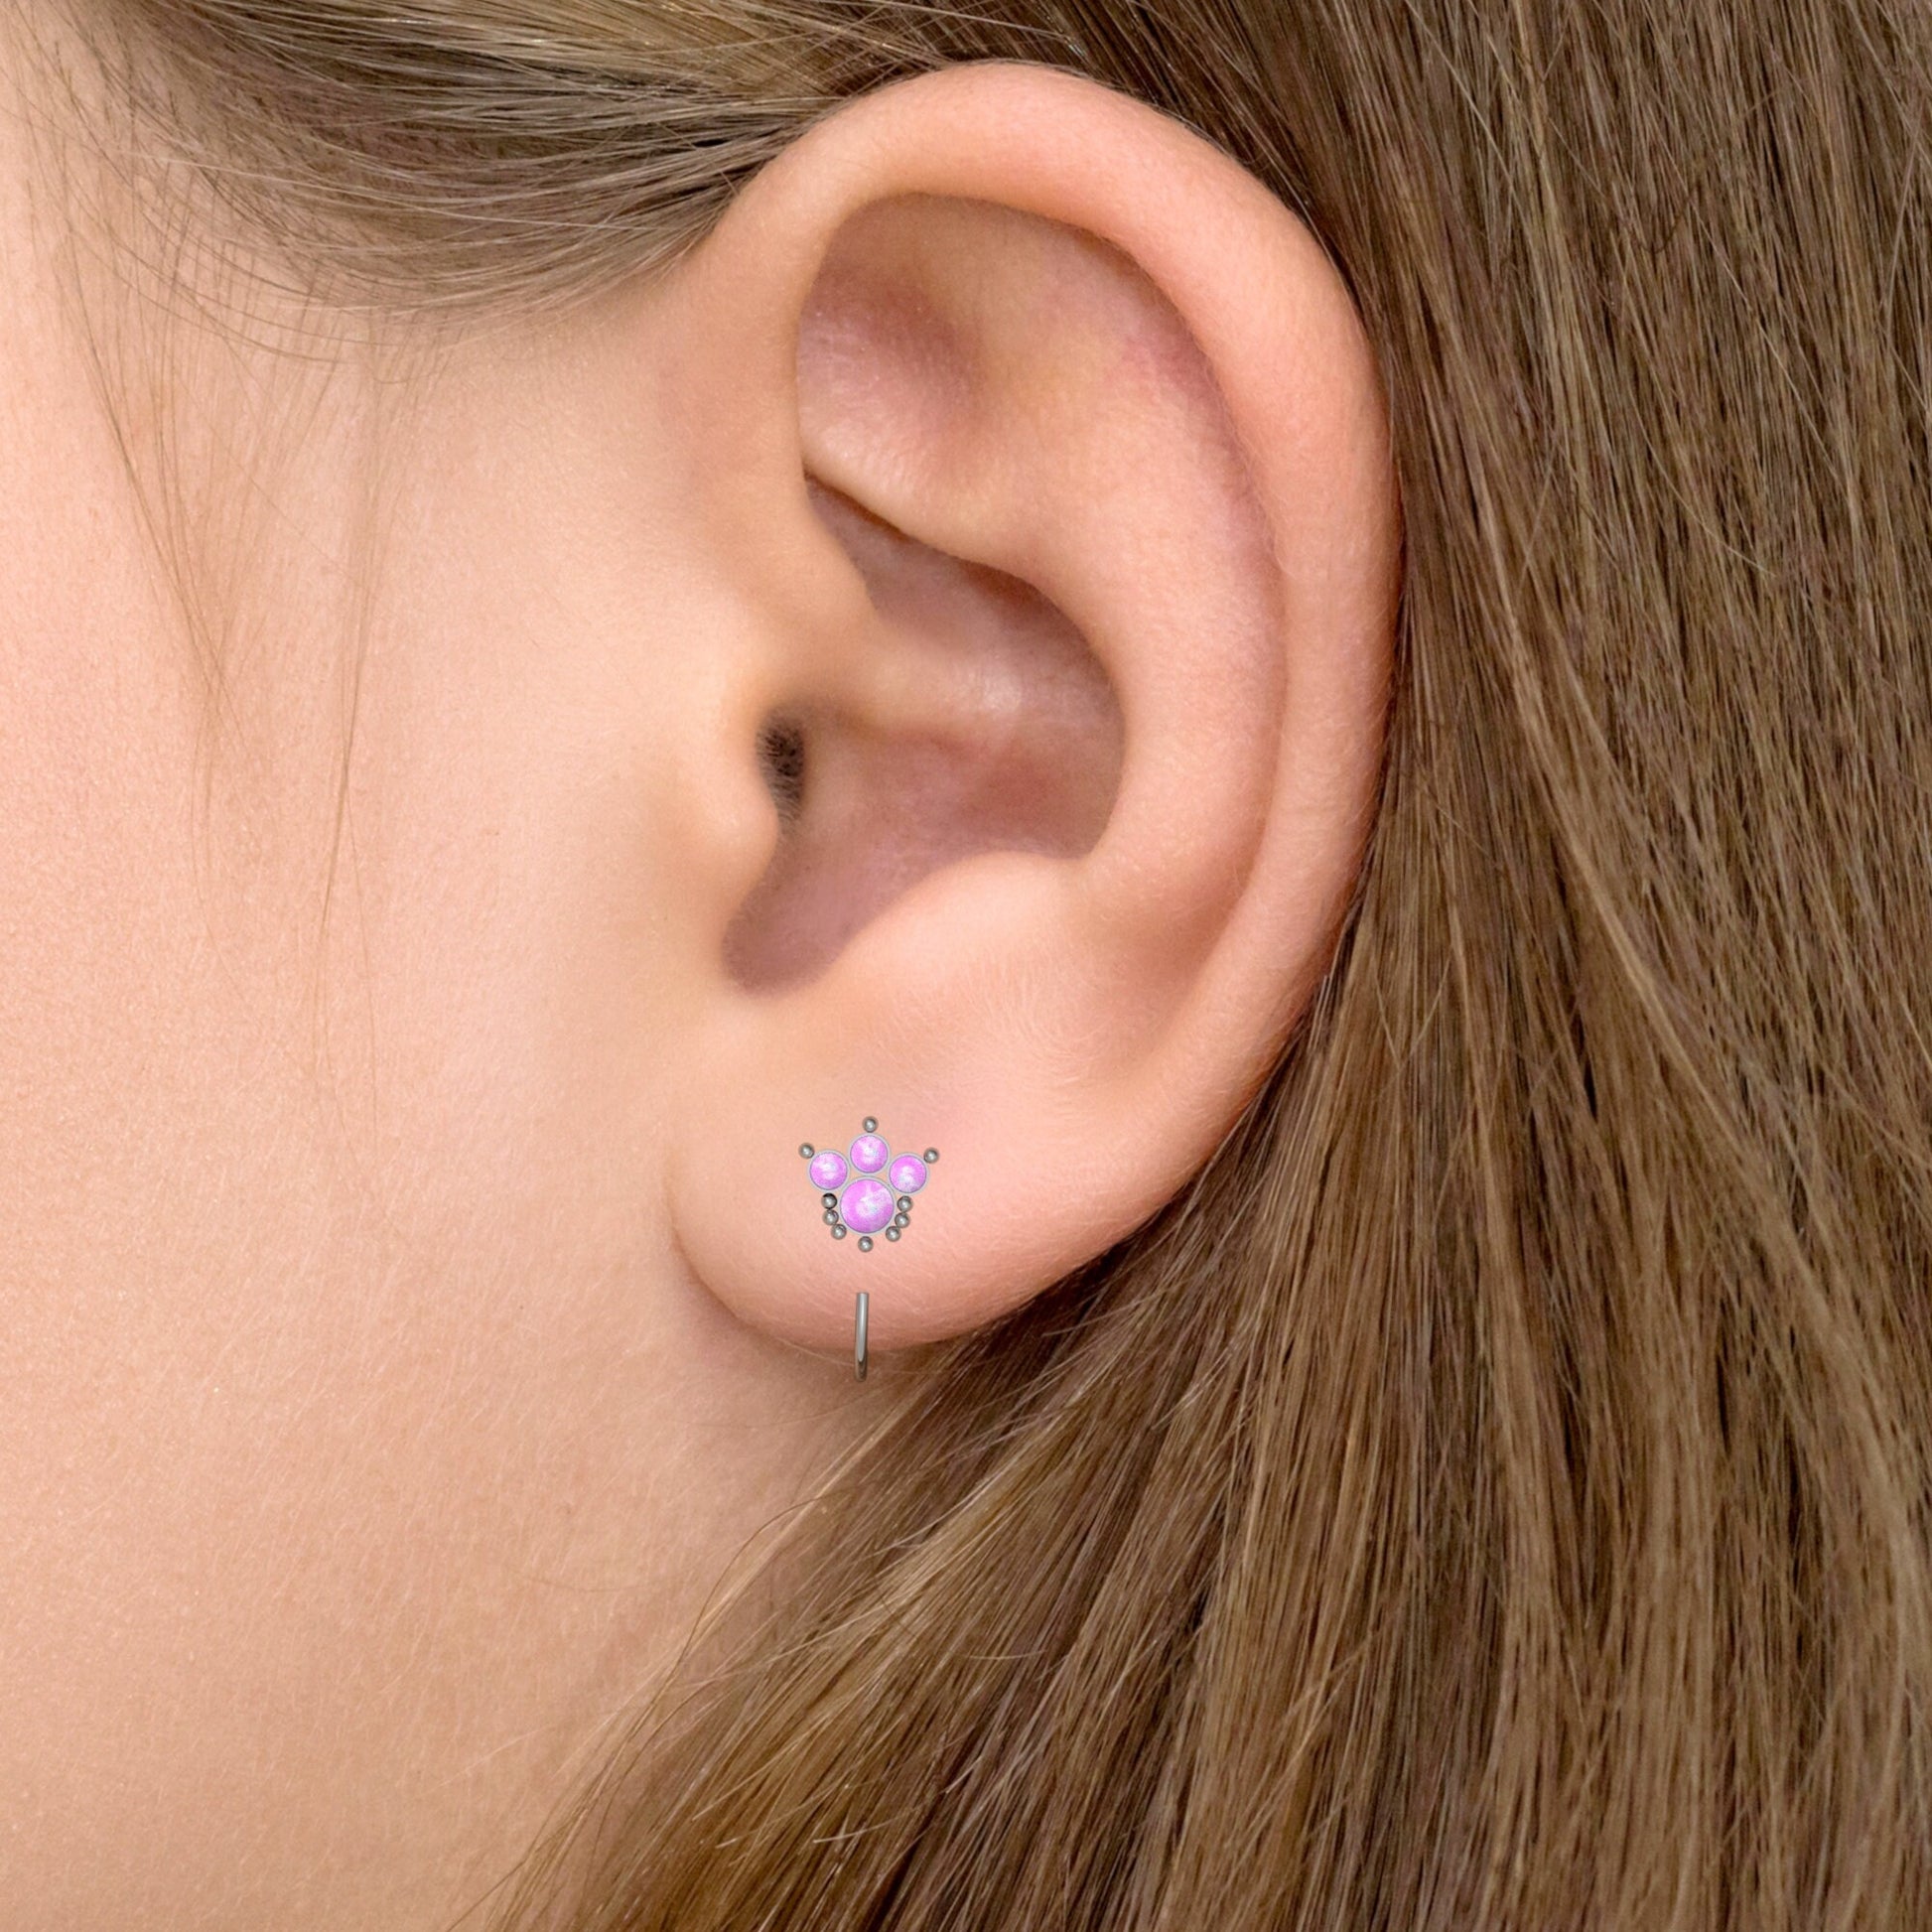 Titanium Open Hoop Earrings Implant Grade - TitaniumFashion